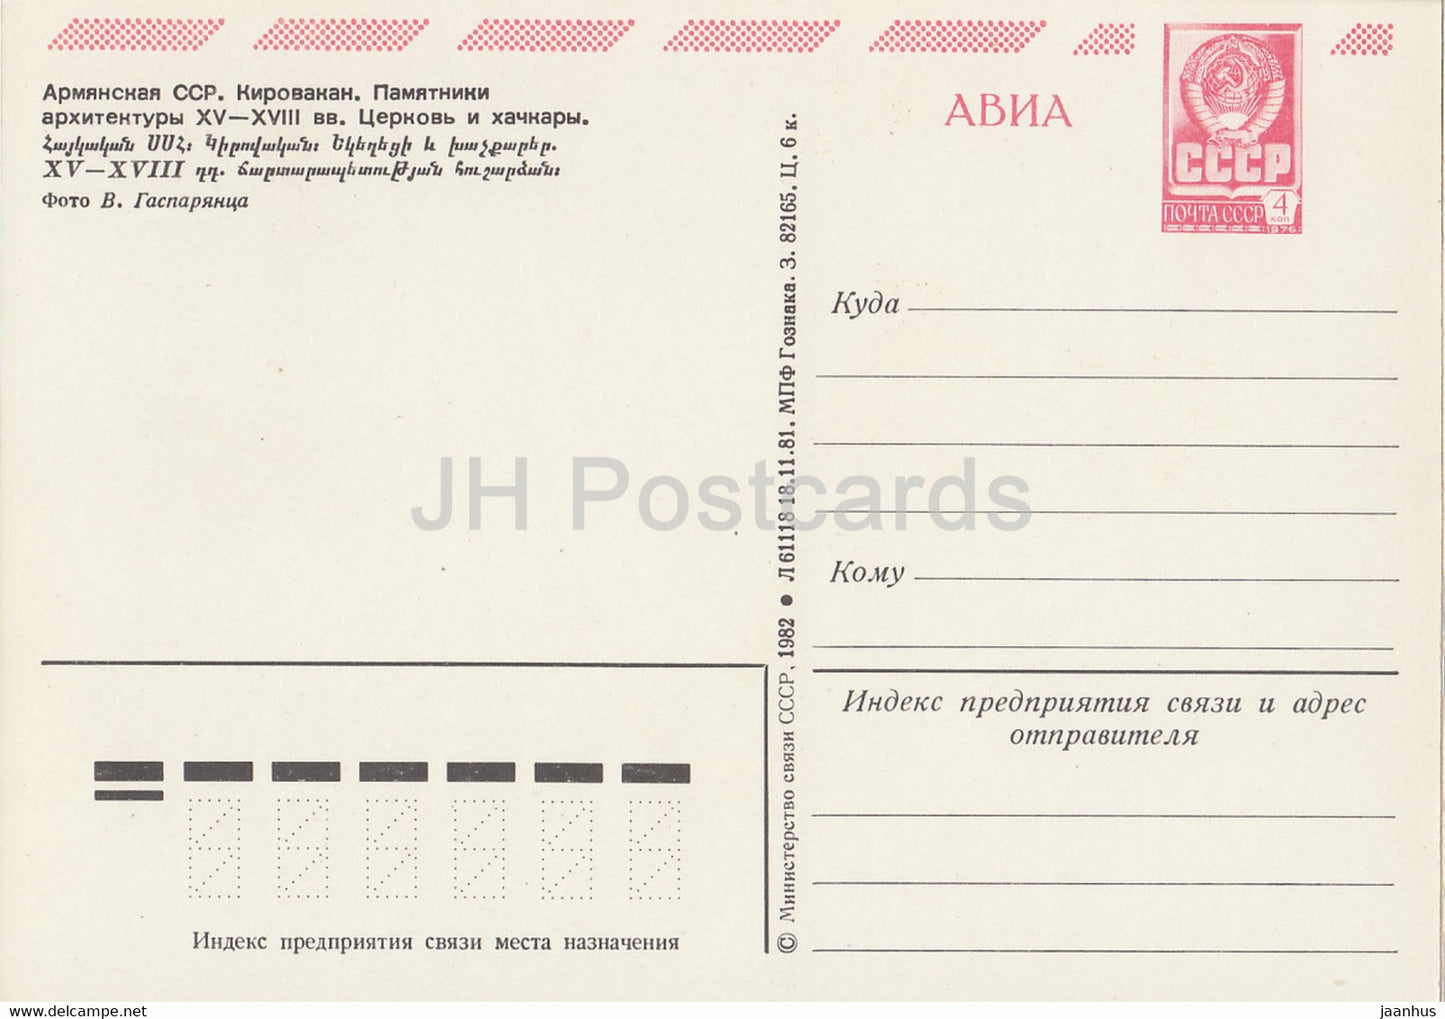 Kirovakan - church - hachkara - AVIA - postal stationery - 1982 - Armenia USSR - unused